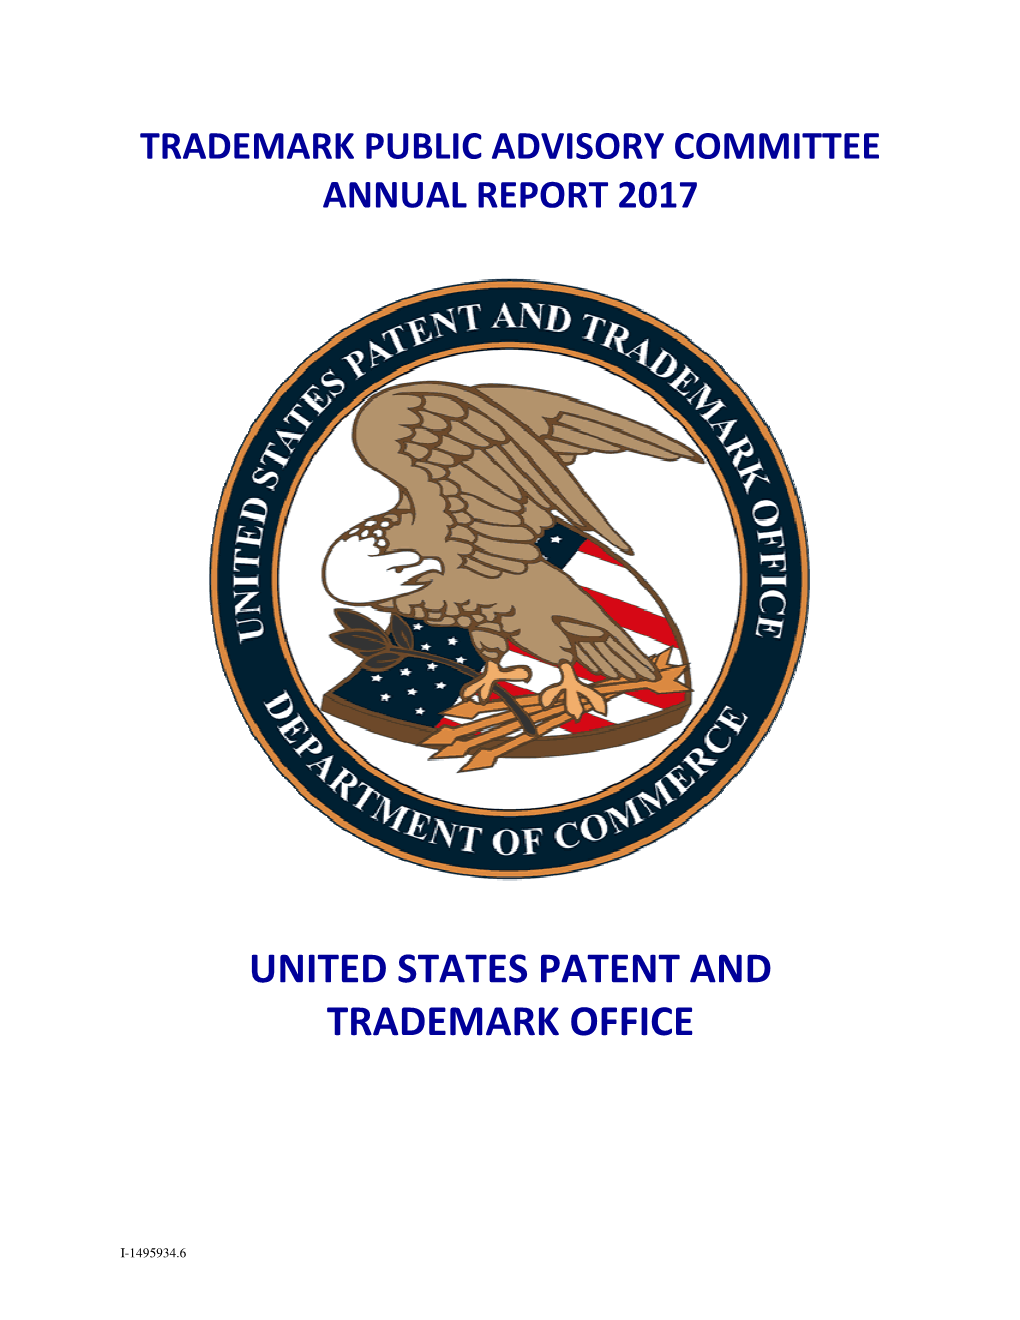 Trademark Public Advisory Committee Annual Report 2017